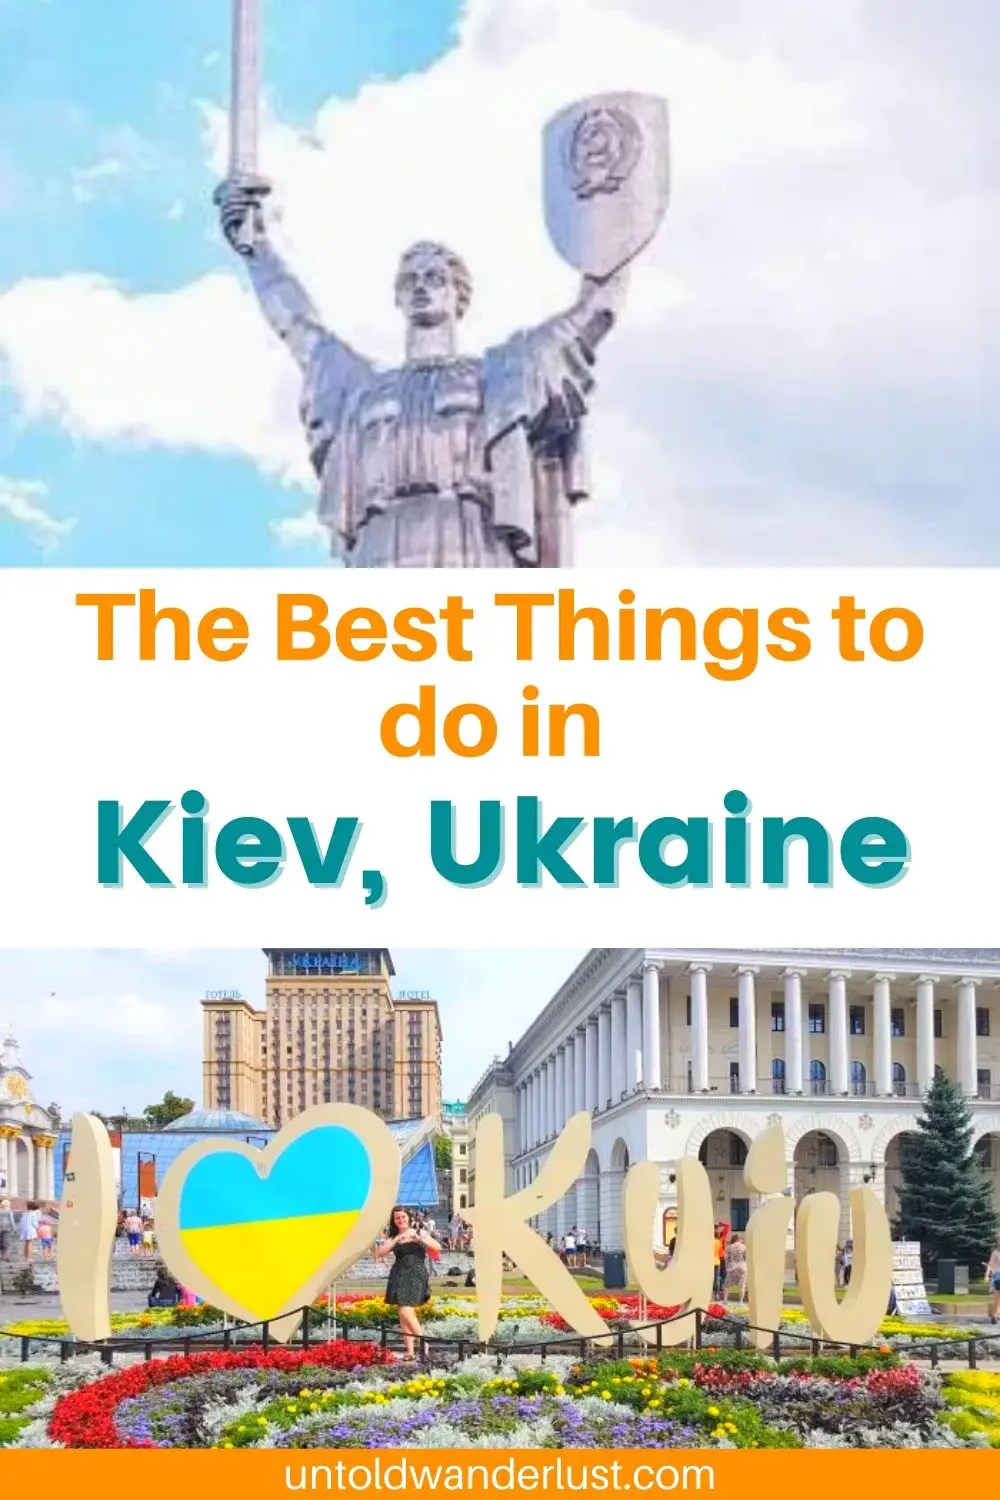 The Best Things to do in Kiev, Ukraine